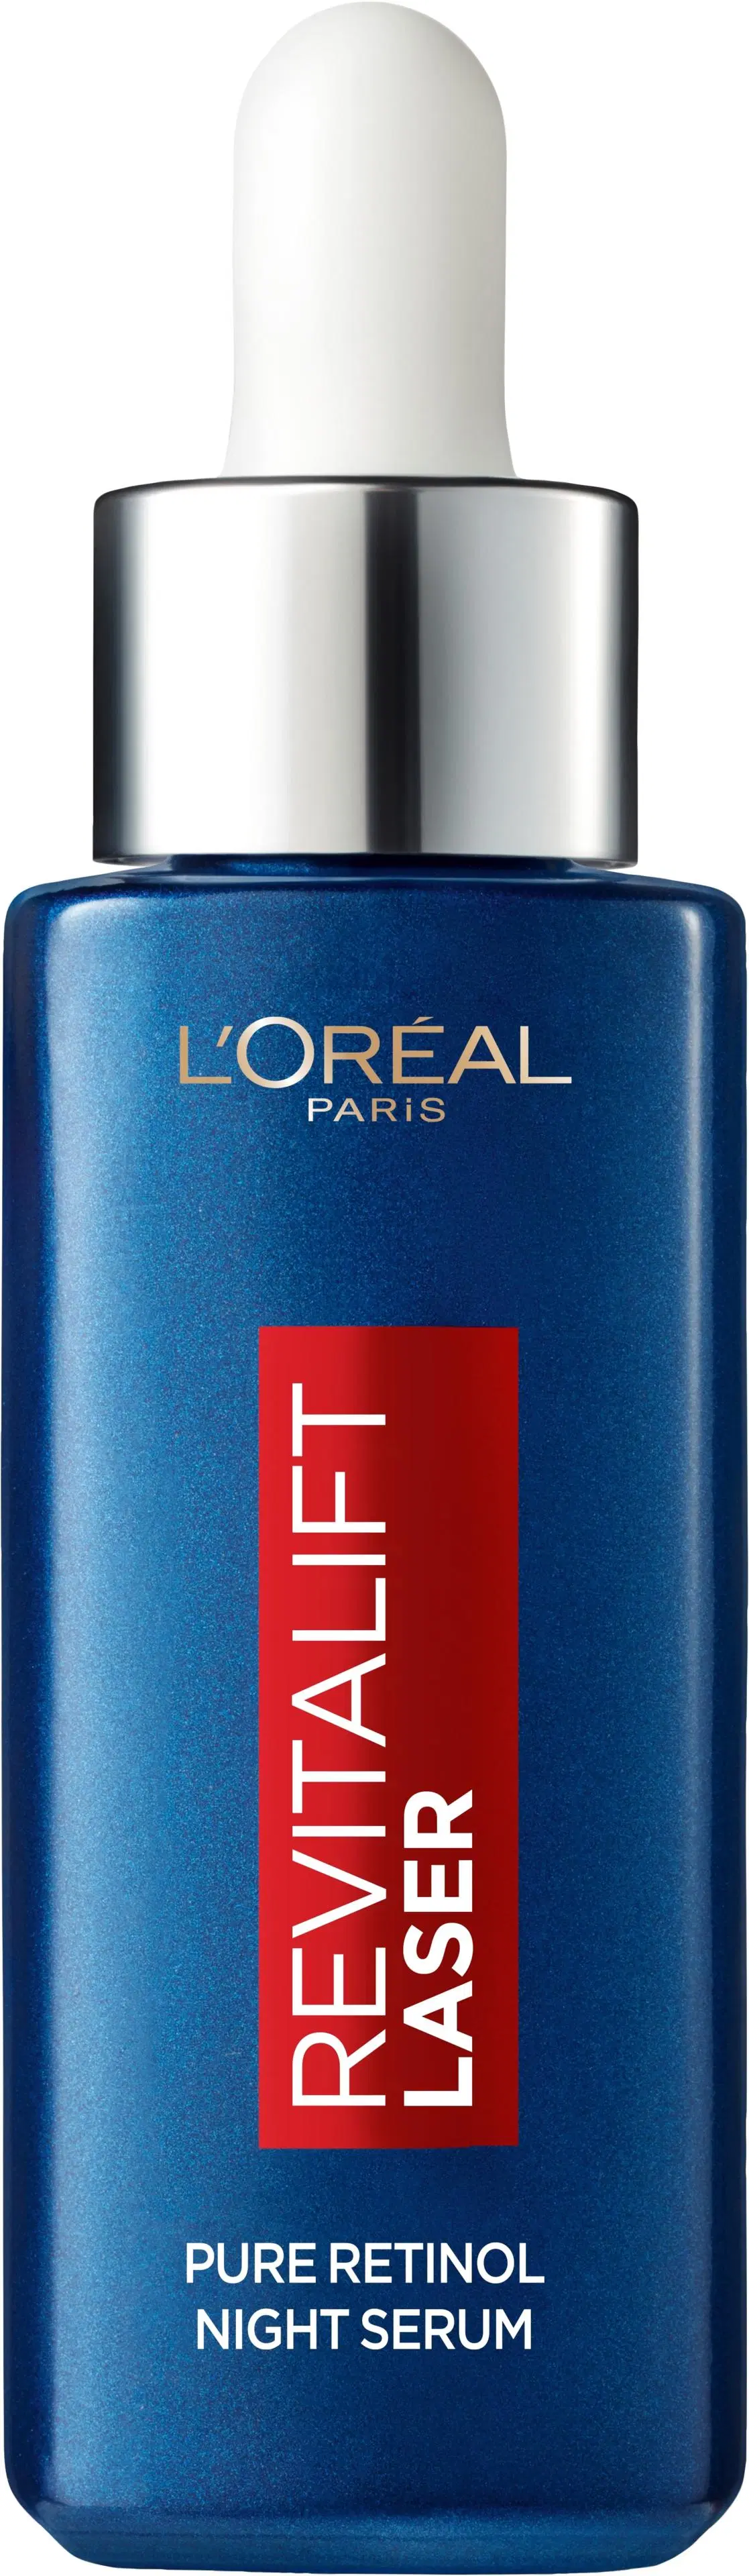 L'Oréal Paris Revitalift Laser Pure Retinol yöseerumi ryppyjä vastaan 30ml